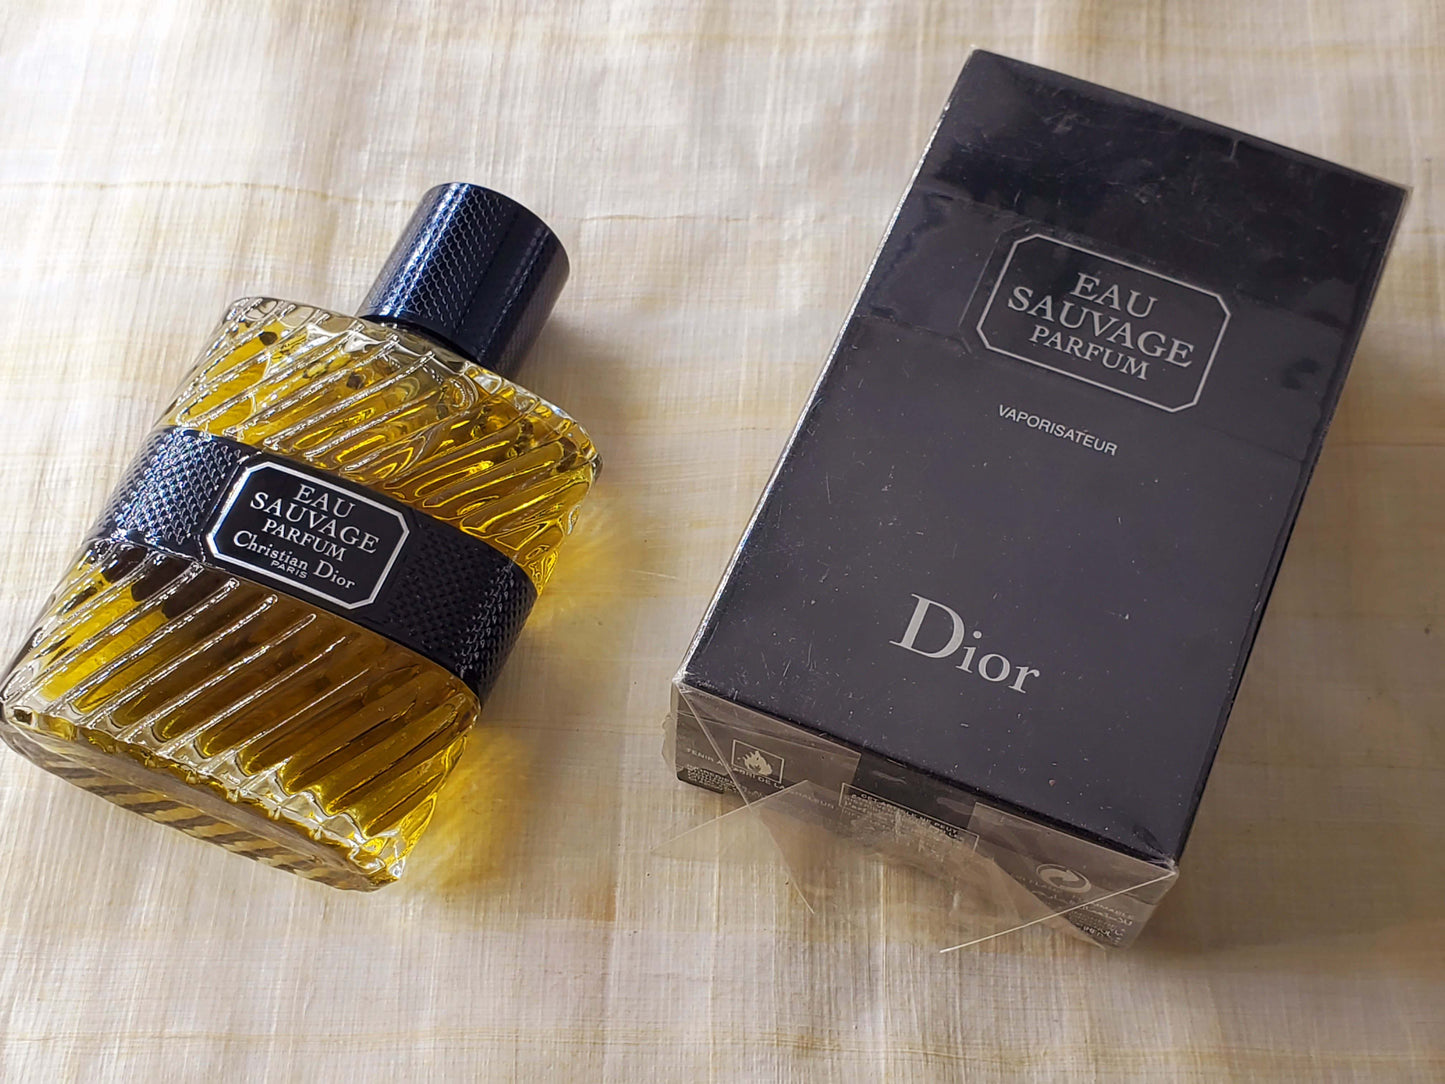 Christian Dior Eau Sauvage Parfum (First Edition) for men EDP Spray 100 ml 3.4 oz OR 50 ml 1.7 oz, Rare, Vintage